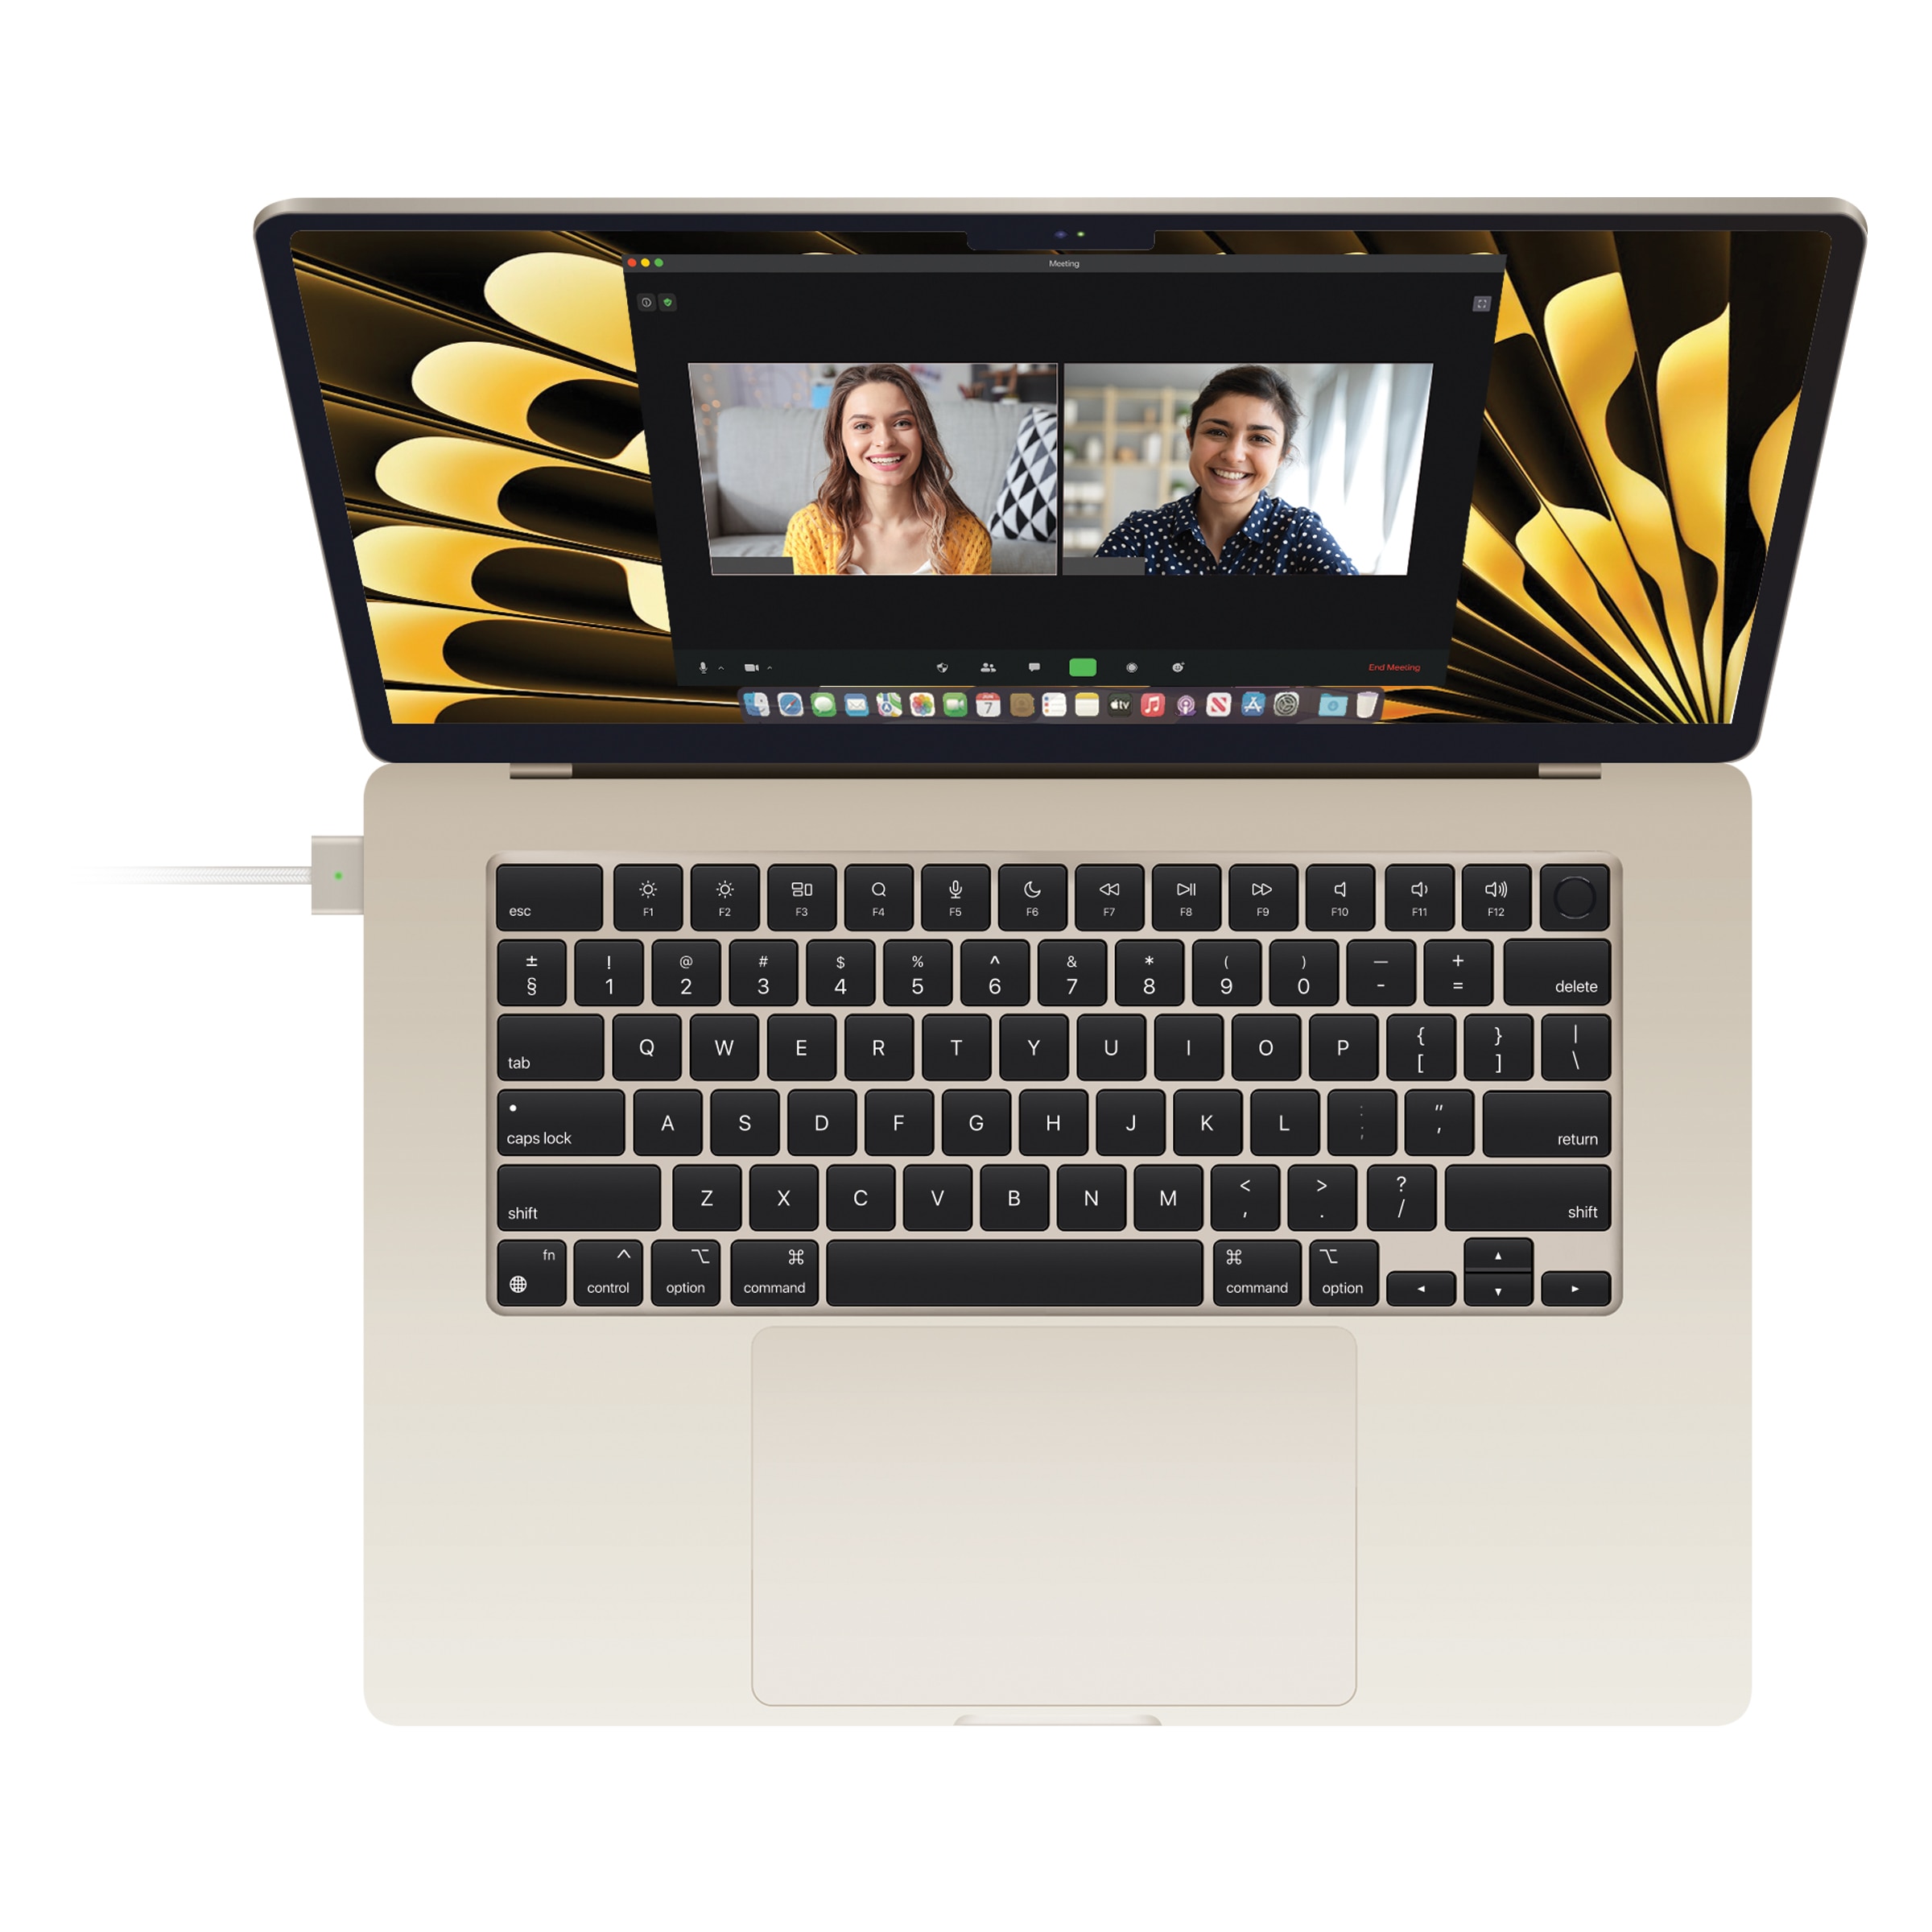 Electronics - Computers & Office - Laptops - Macbooks - Apple 